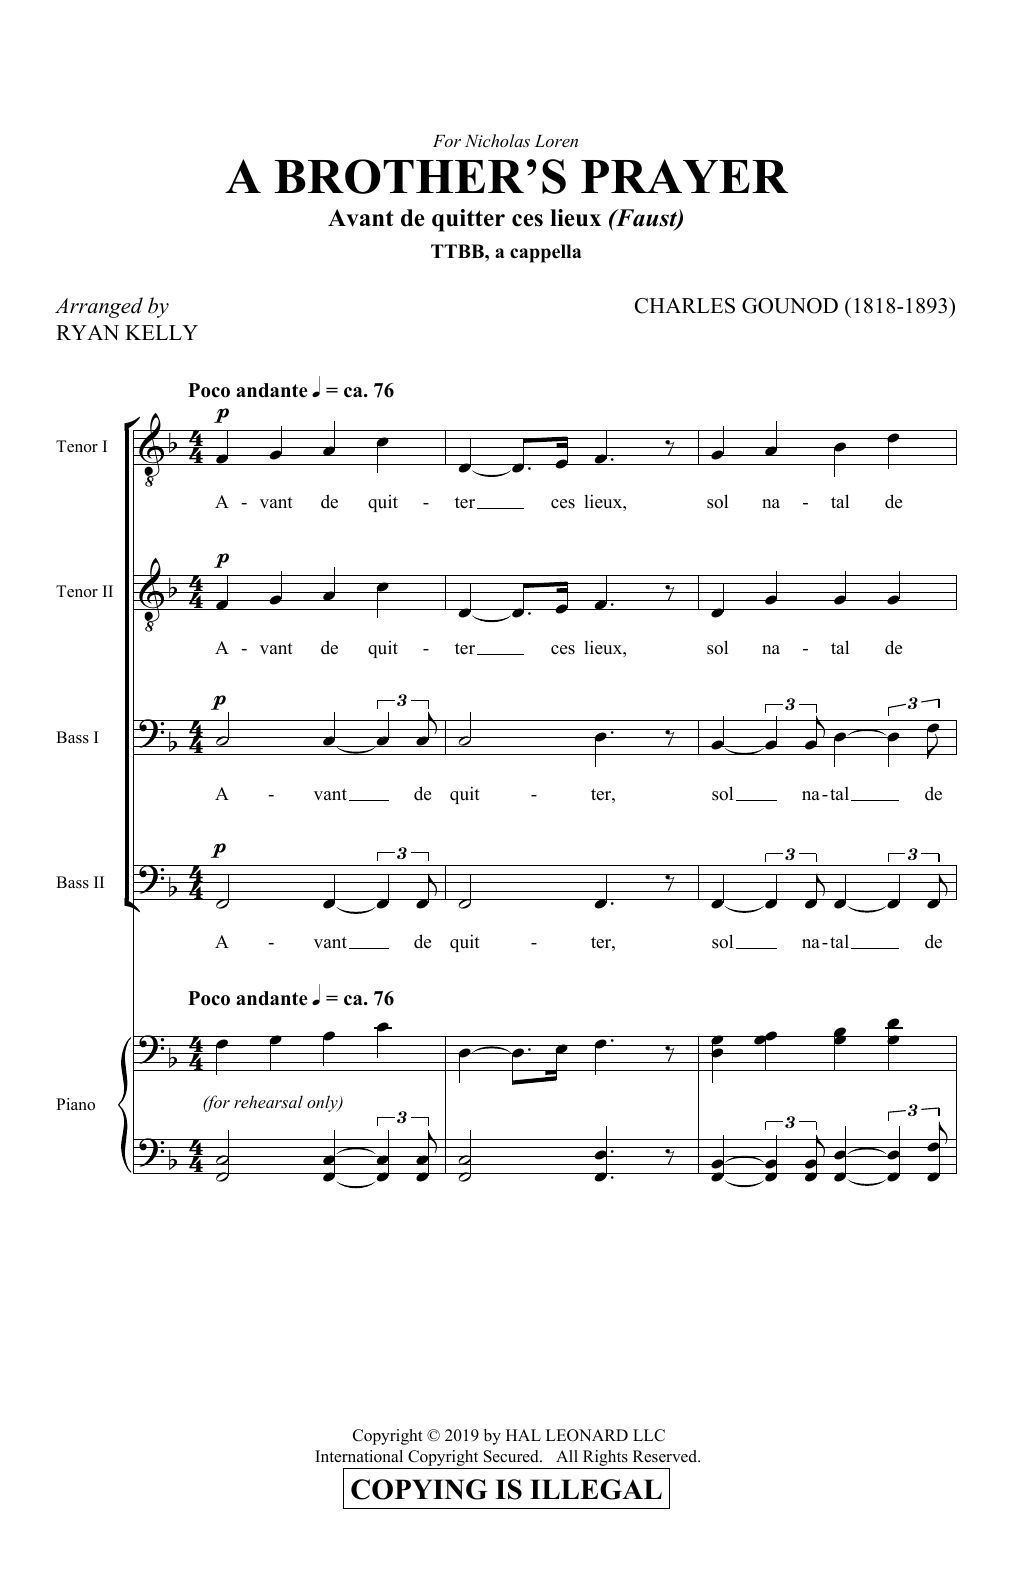 Charles Gounod A Brother's Prayer (Avant de quitter ces lieux) (arr. Ryan Kelly) sheet music notes and chords arranged for TTBB Choir